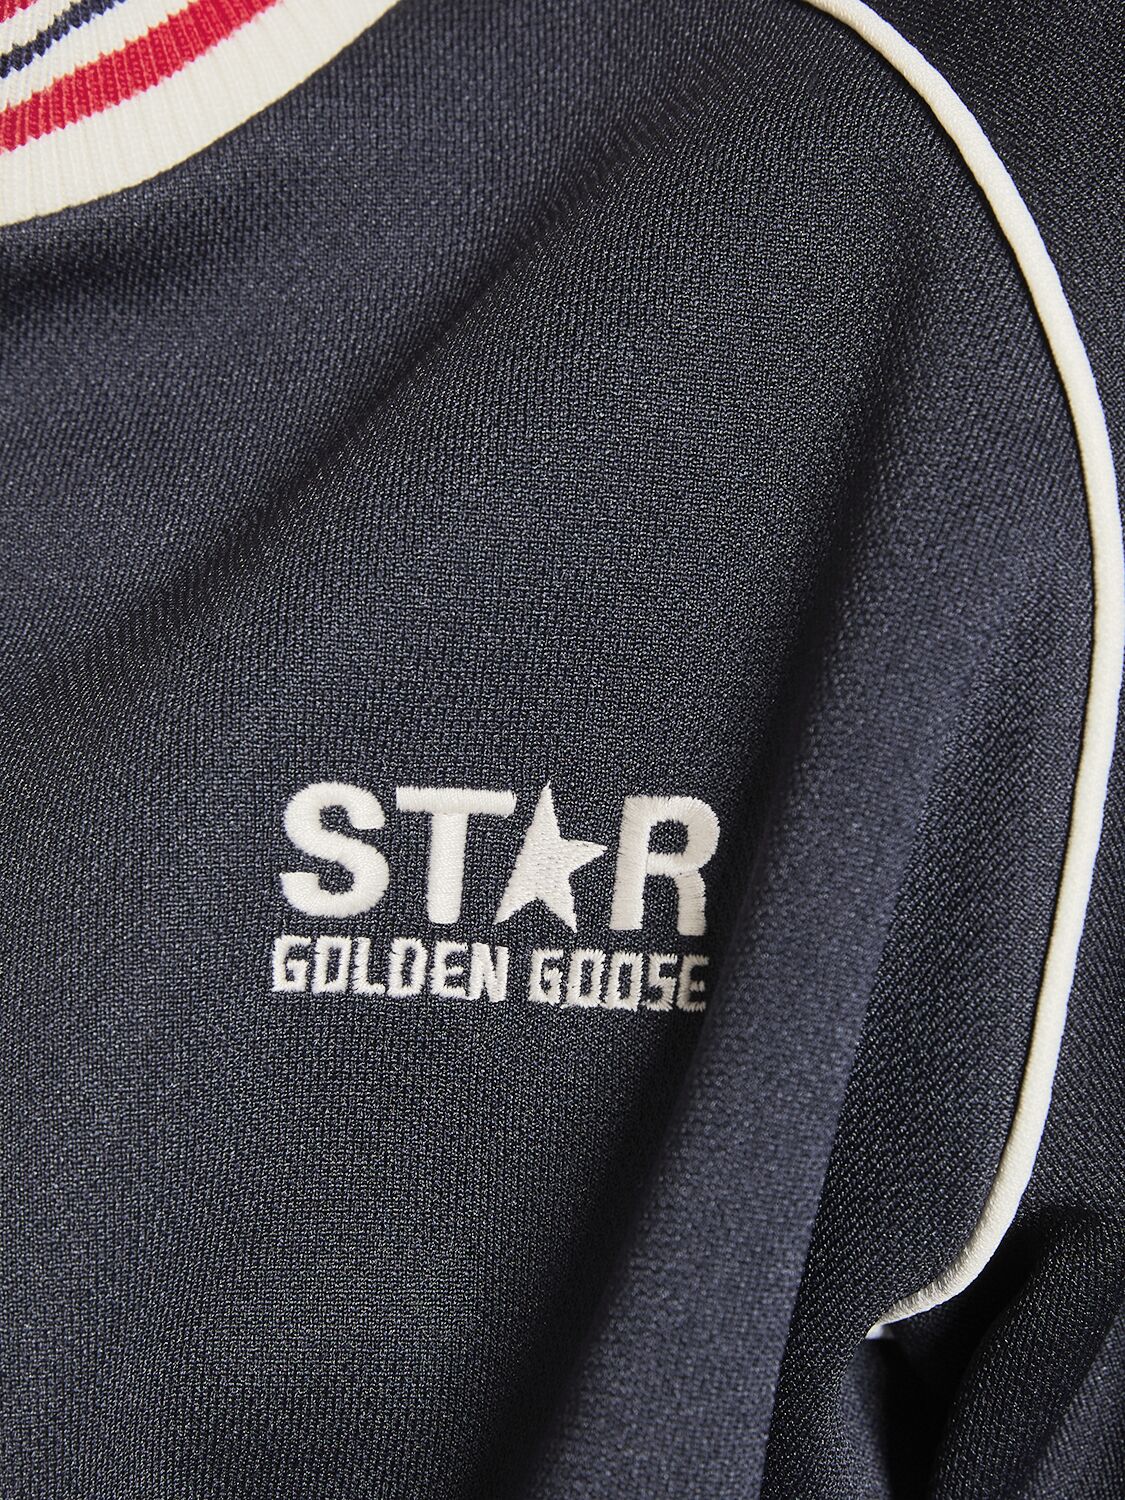 STAR科技织物插肩卫衣